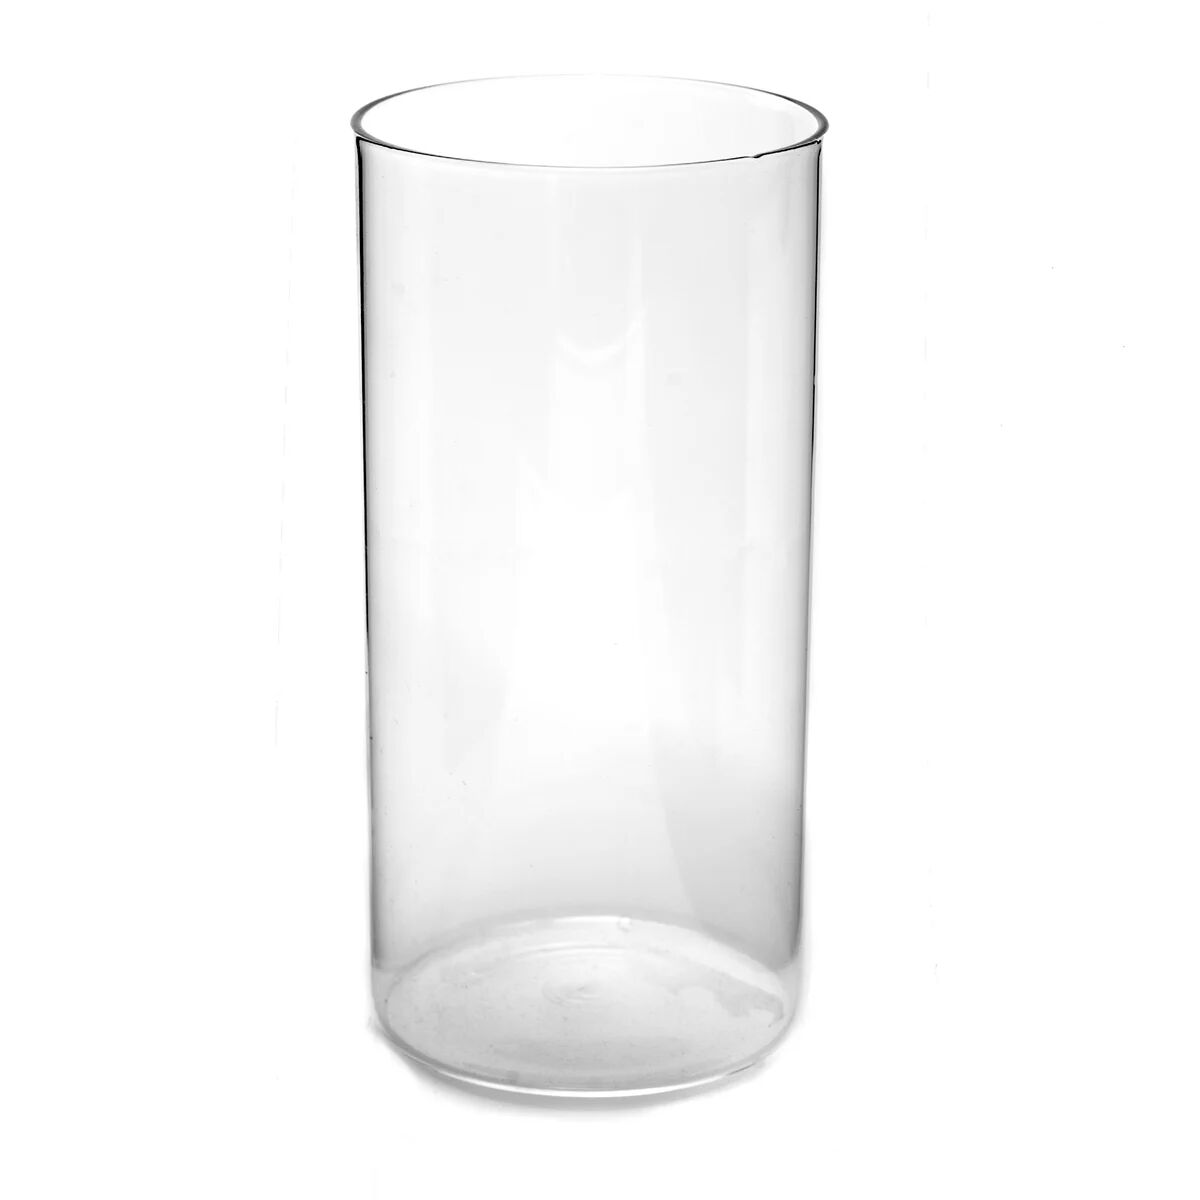 Ørskov glass xx-large